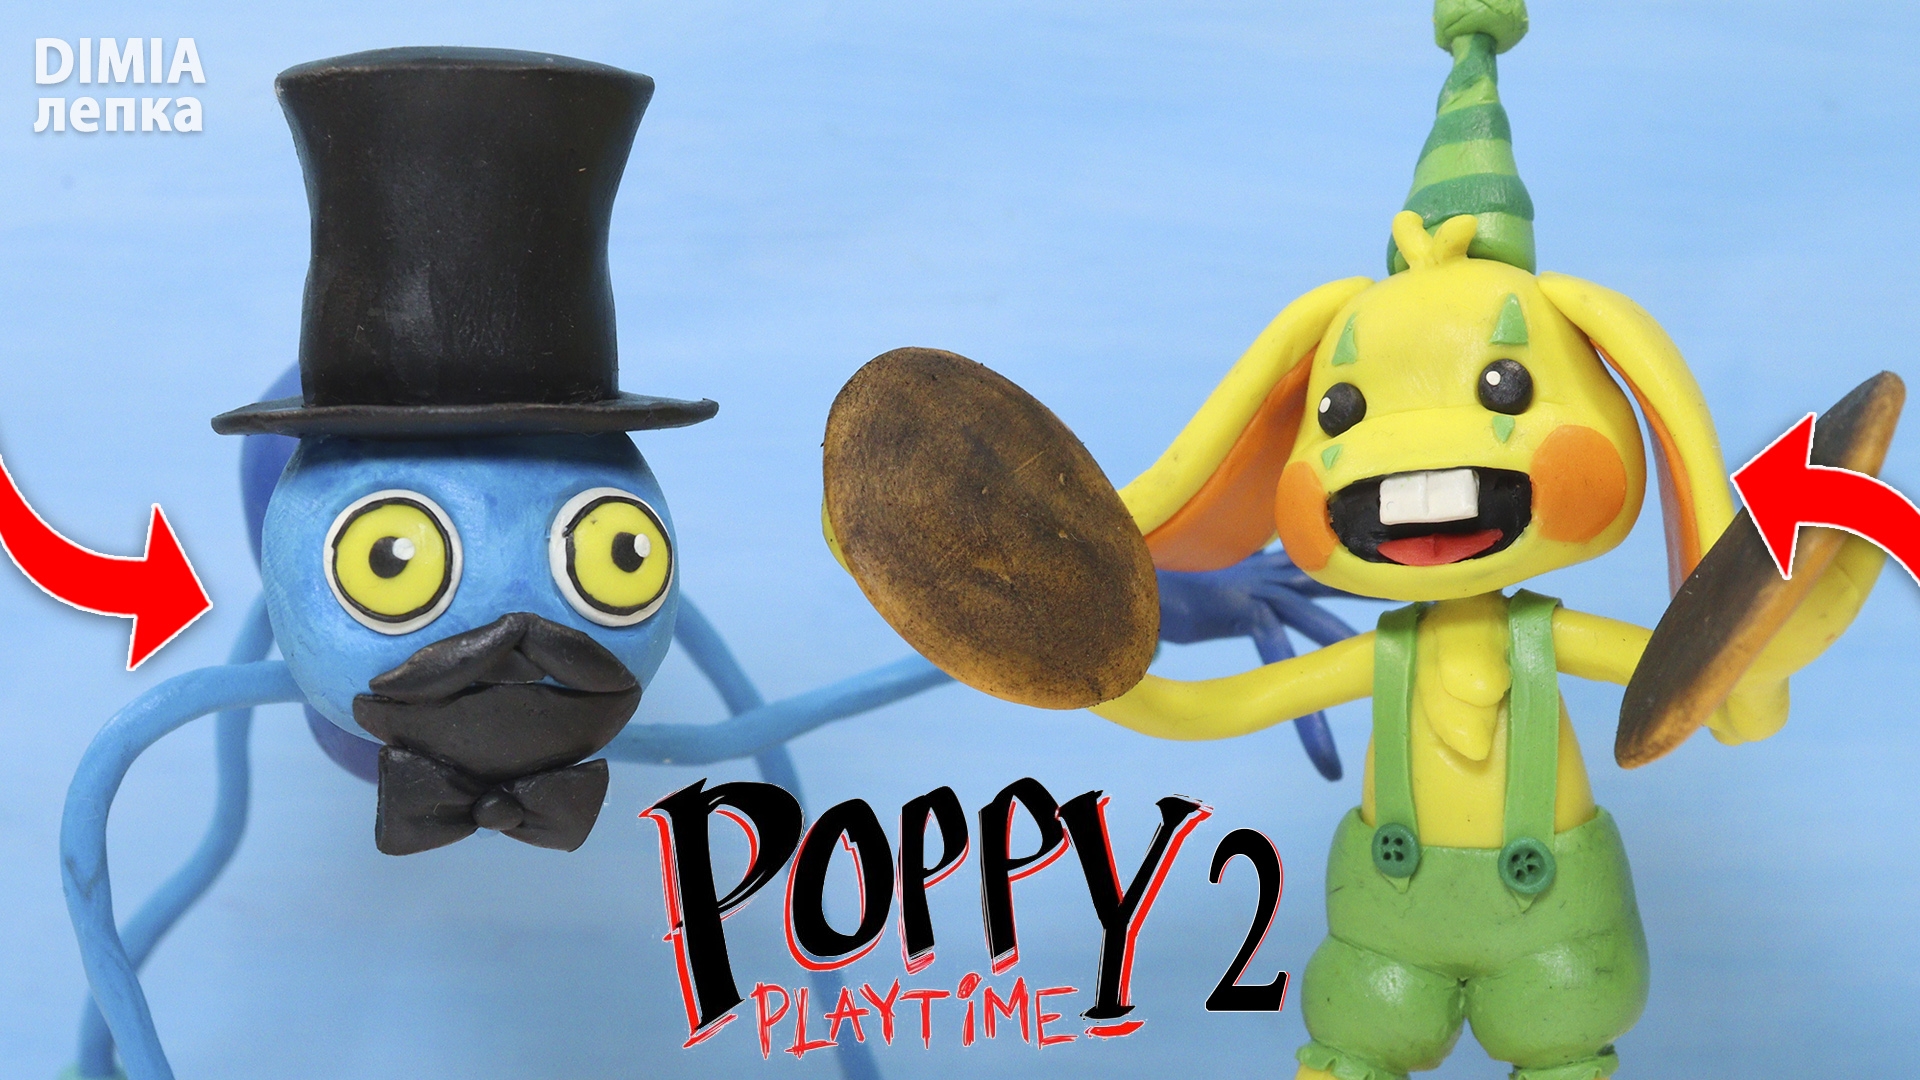 Кролик из поппи плейтайм. Бонзо Поппи. Кролик Бонзо Poppy Playtime. Кролик Банзо из Poppy Playtime 2 игрушка. Кролик Банзо из Poppy Playtime игрушка.